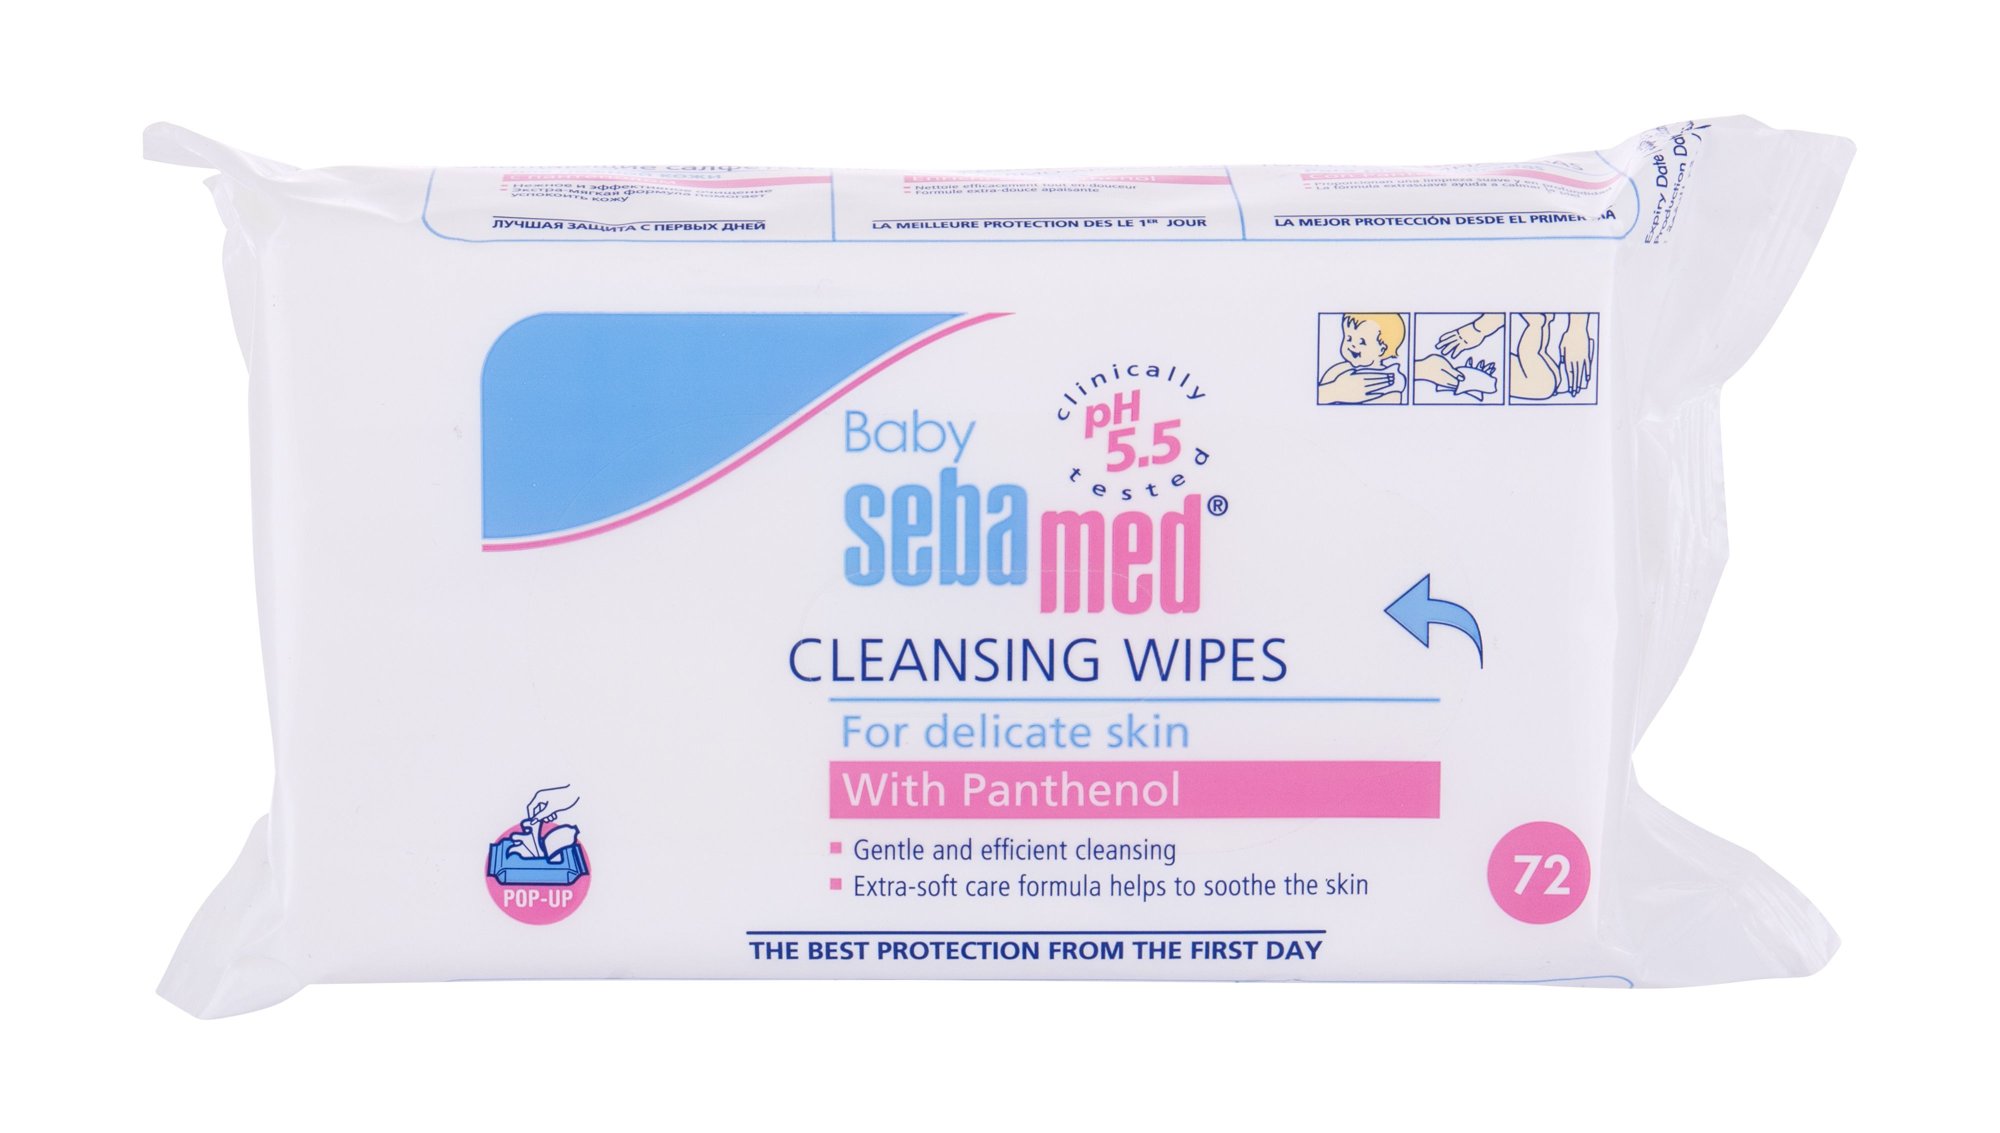 SebaMed Baby Cleansing Wipes drėgnos servetėlės